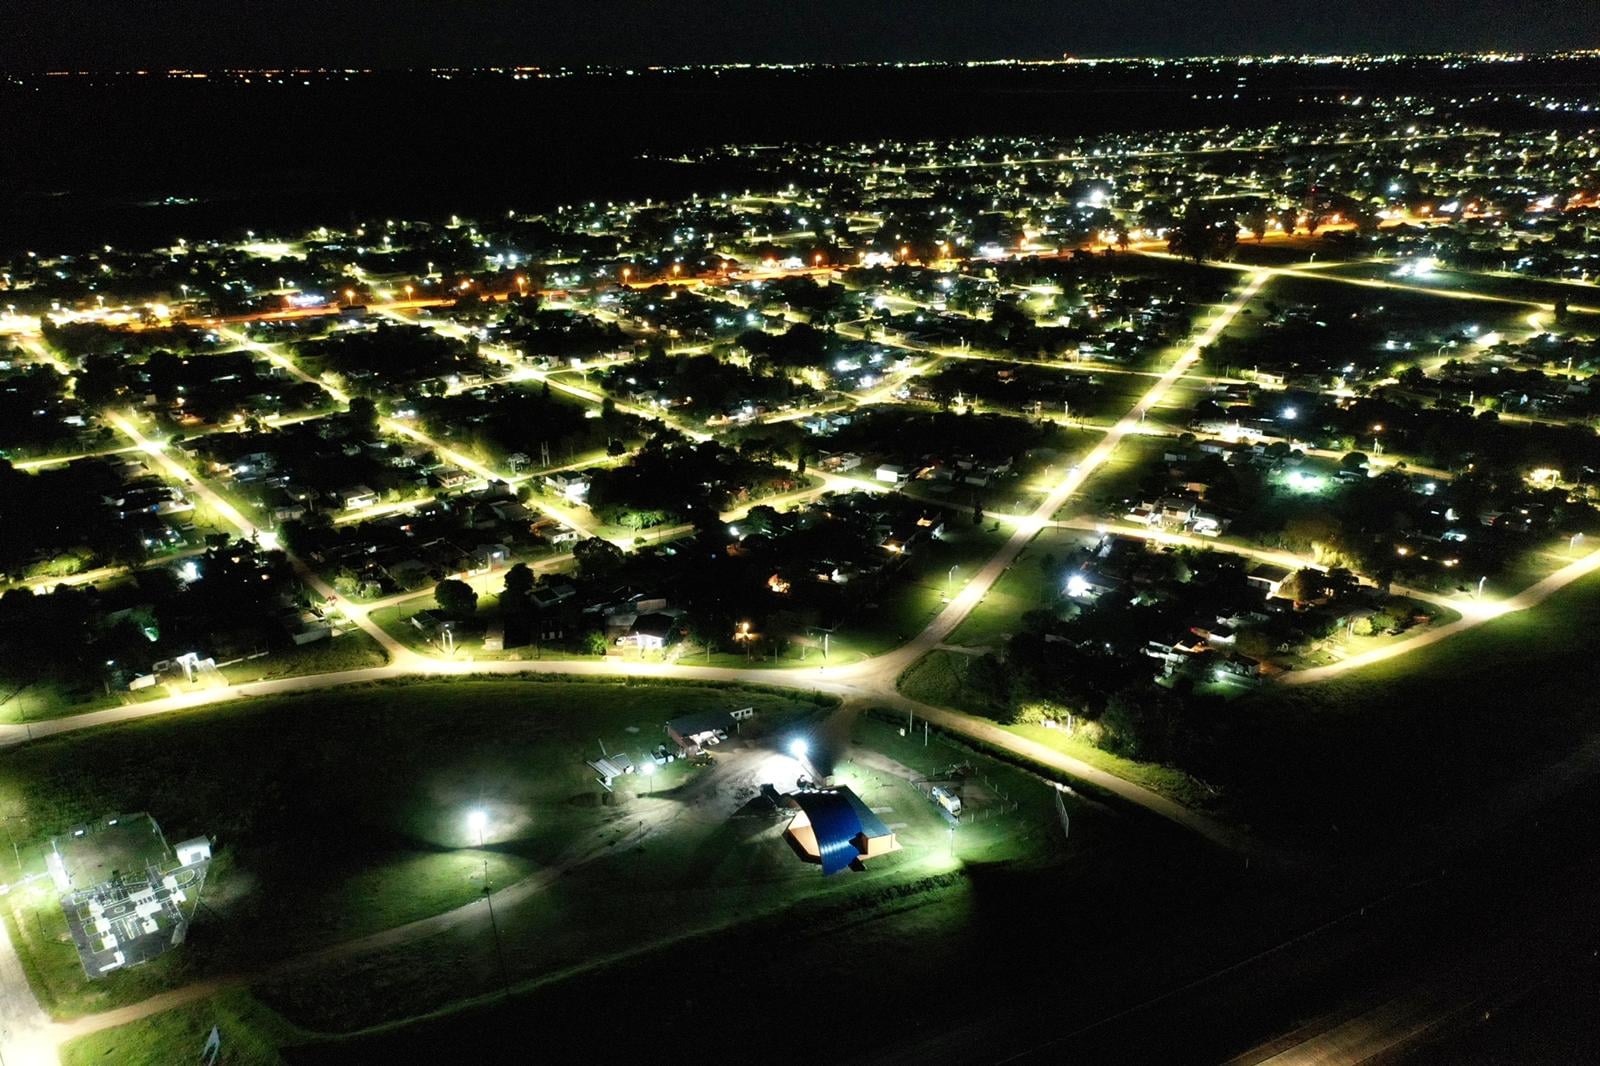 ISJ habilitó 145 luminarias en el barrio Autódromo